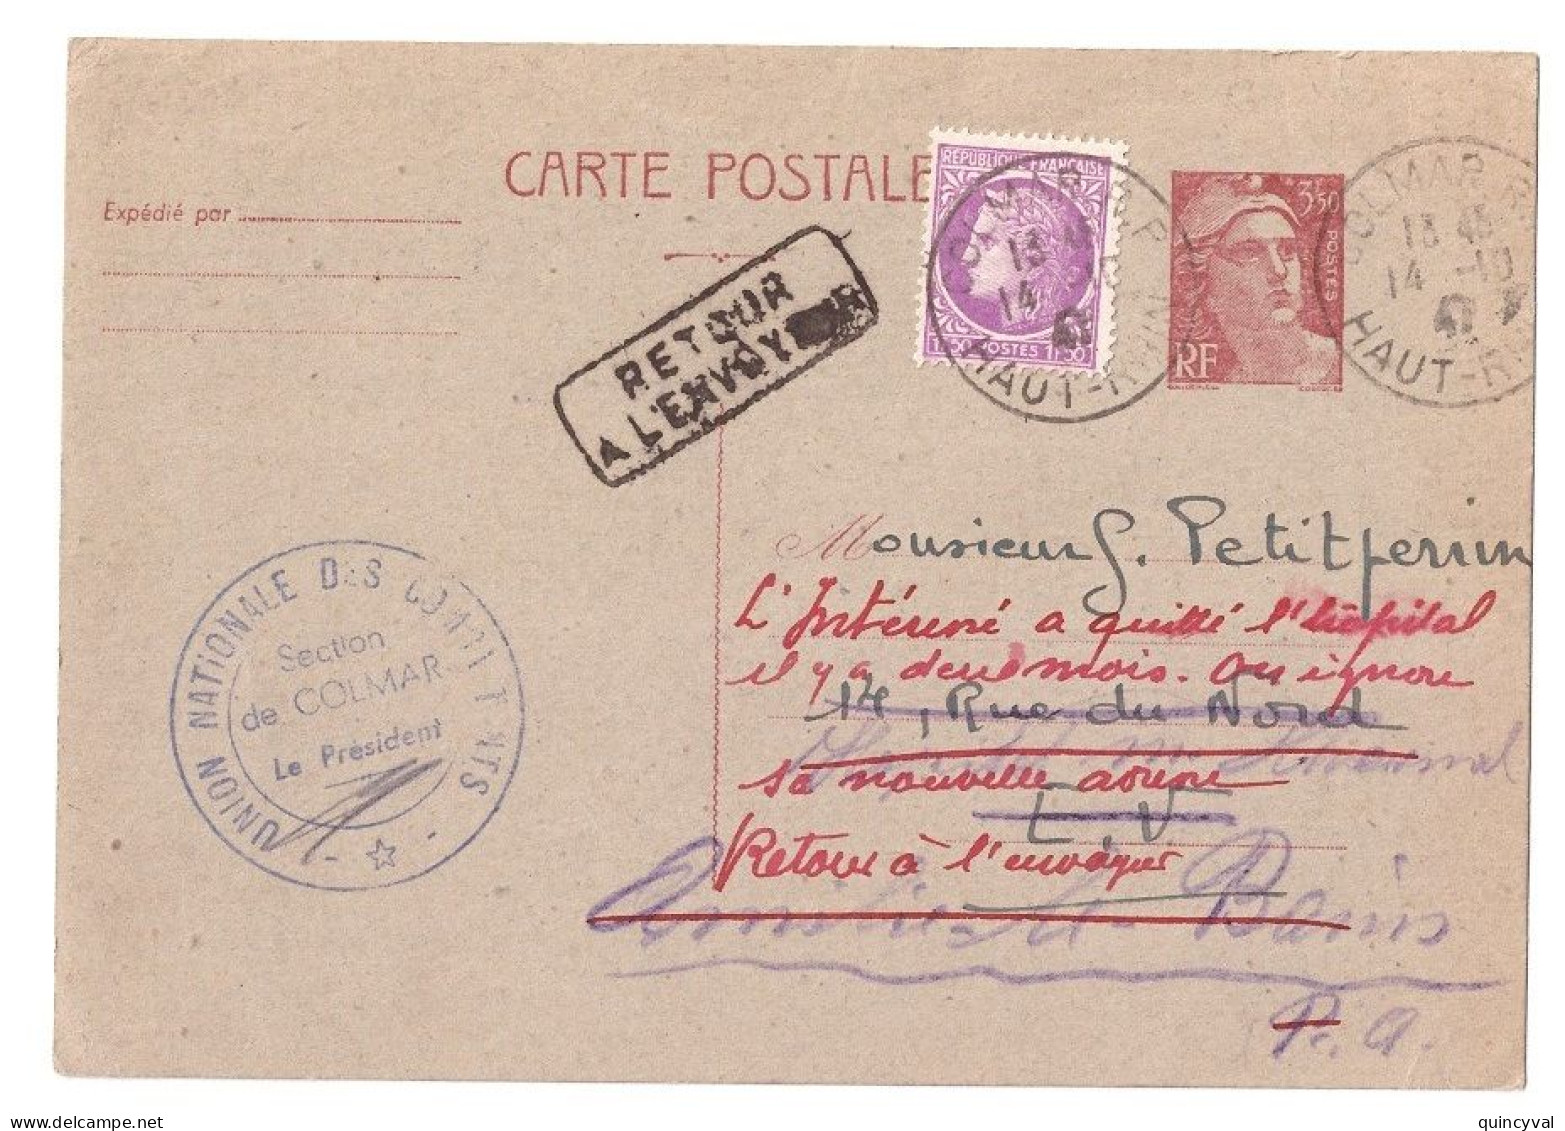 COLMAR RP Haut Rhin Carte Postale Entier 3,50 F Gandon Compl 1,50F Mazelin Retour Envoyeur Ob 14 10 1947 Yv 716B-CP2 - Cartes Postales Types Et TSC (avant 1995)